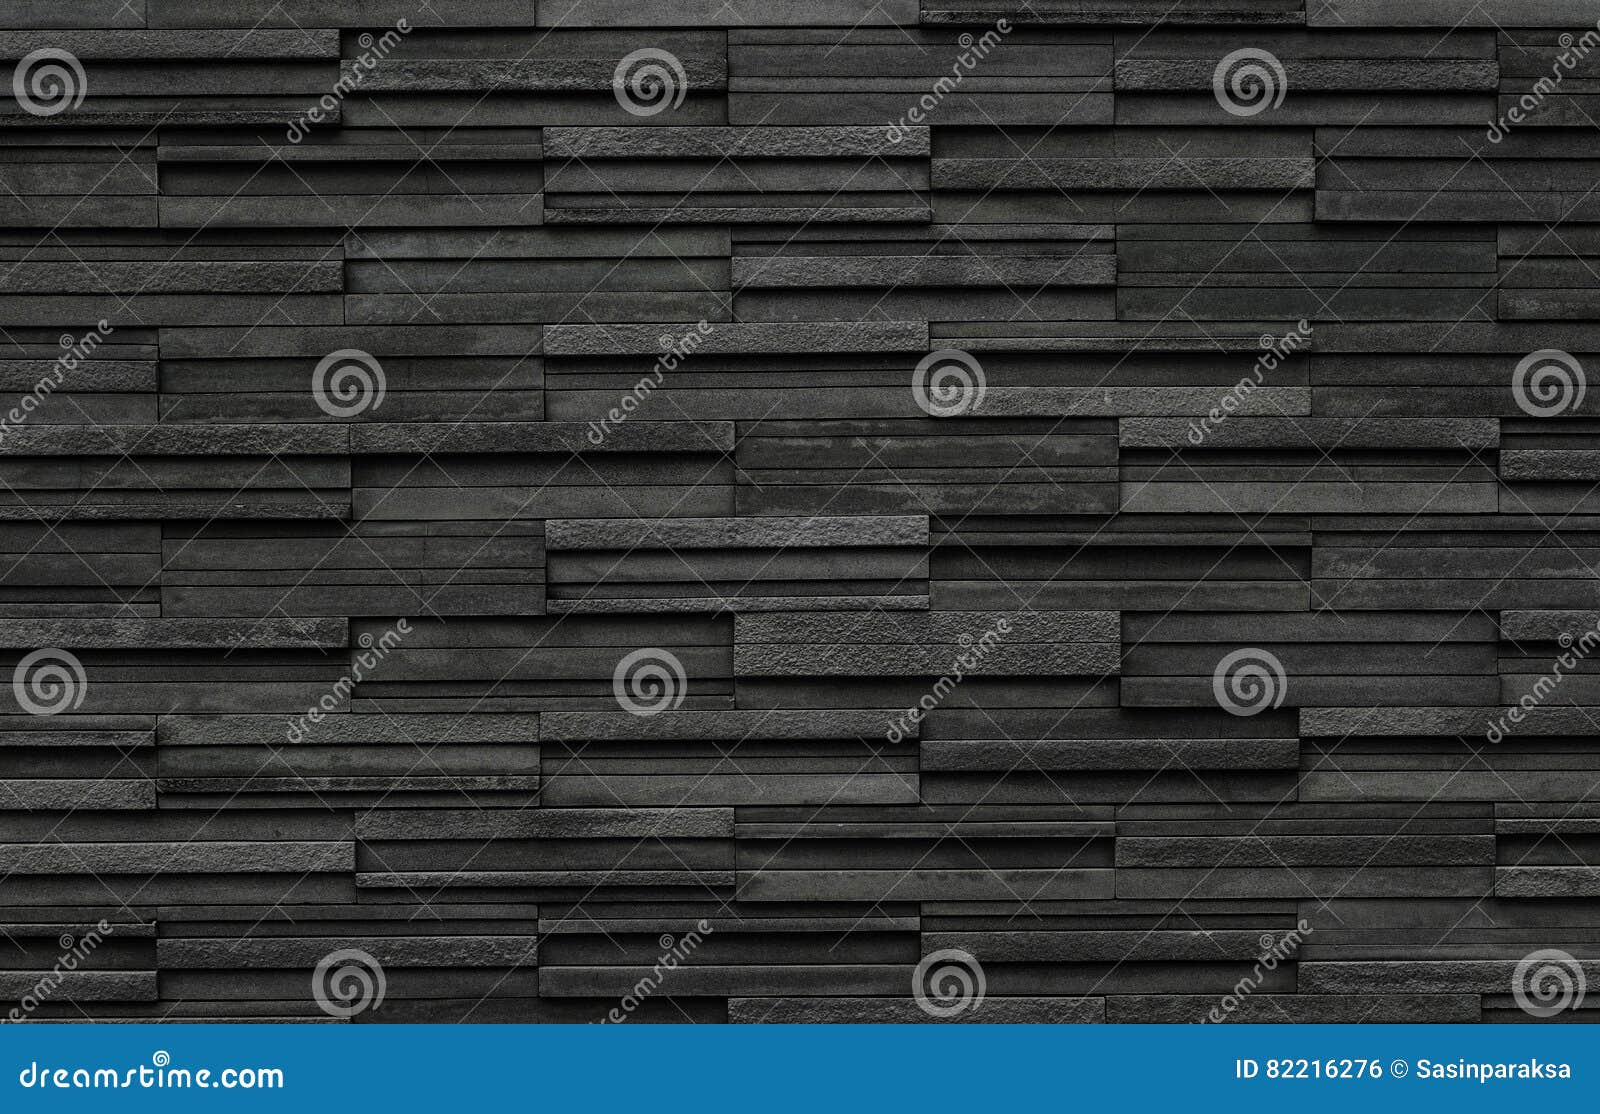 black bricks slate texture background, slate stone wall texture